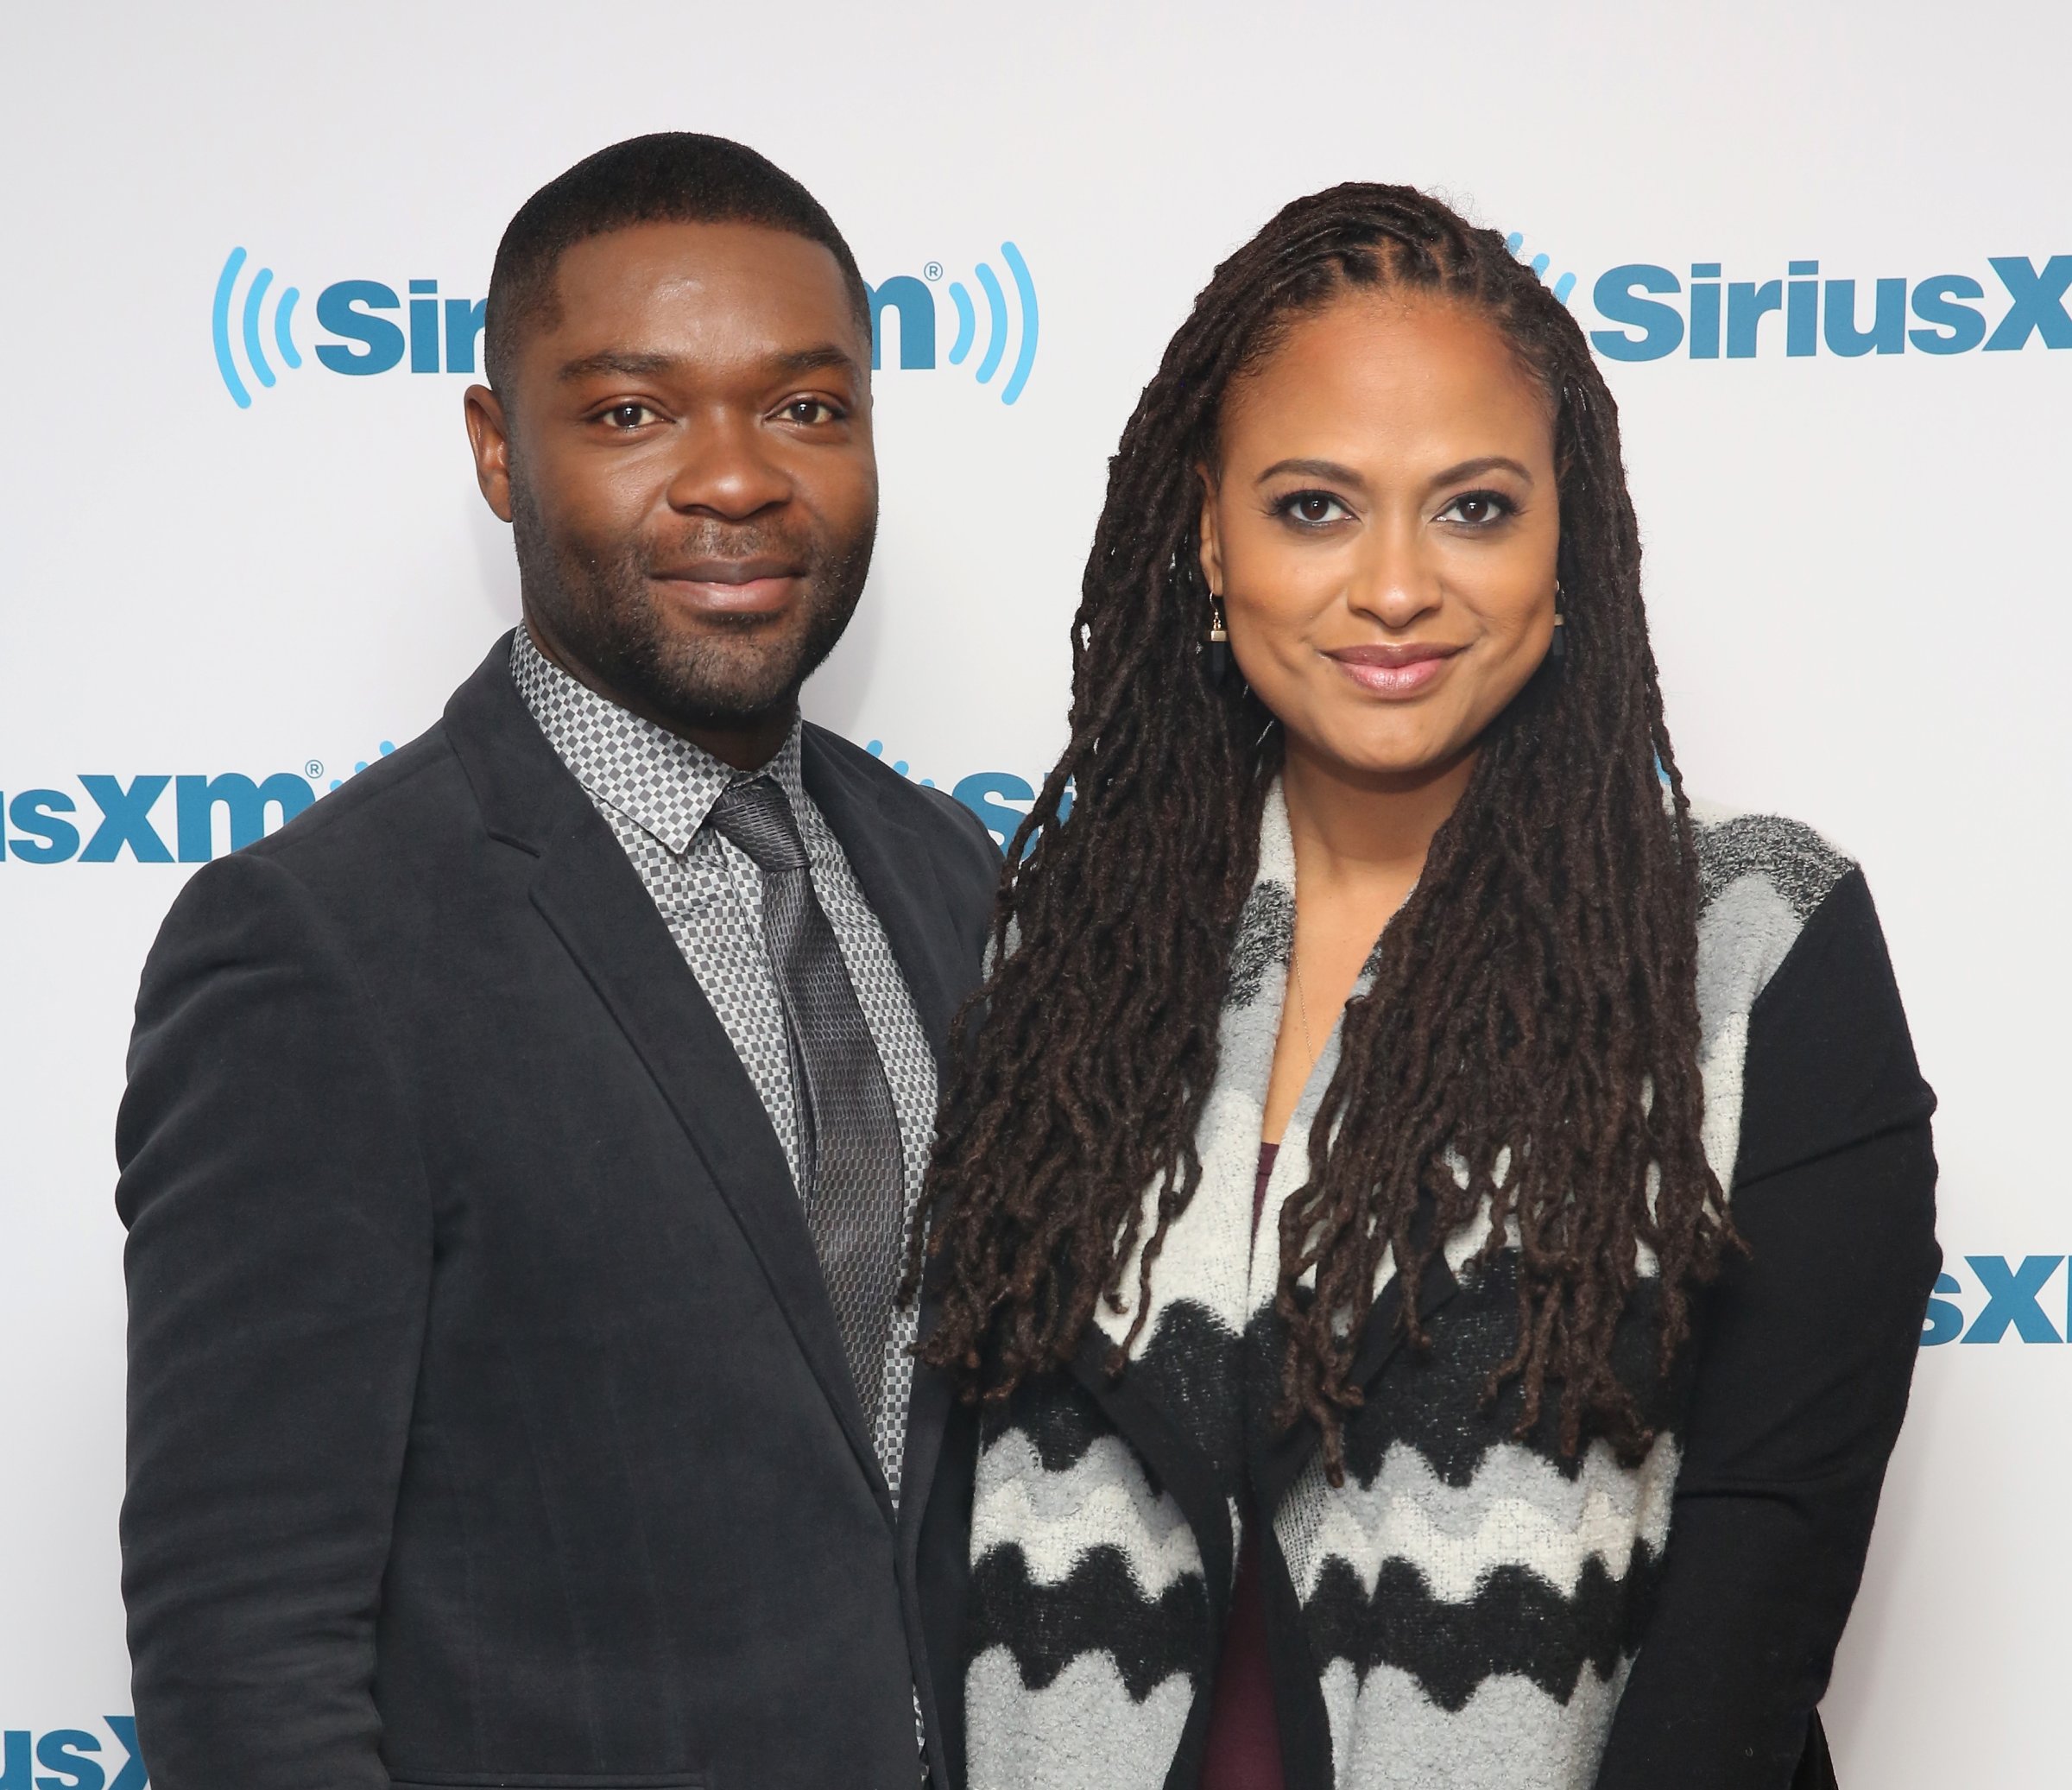 David Oyelowo And Ava DuVernay Visit The SiriusXM Studios For "Selma: An Urban View Special"